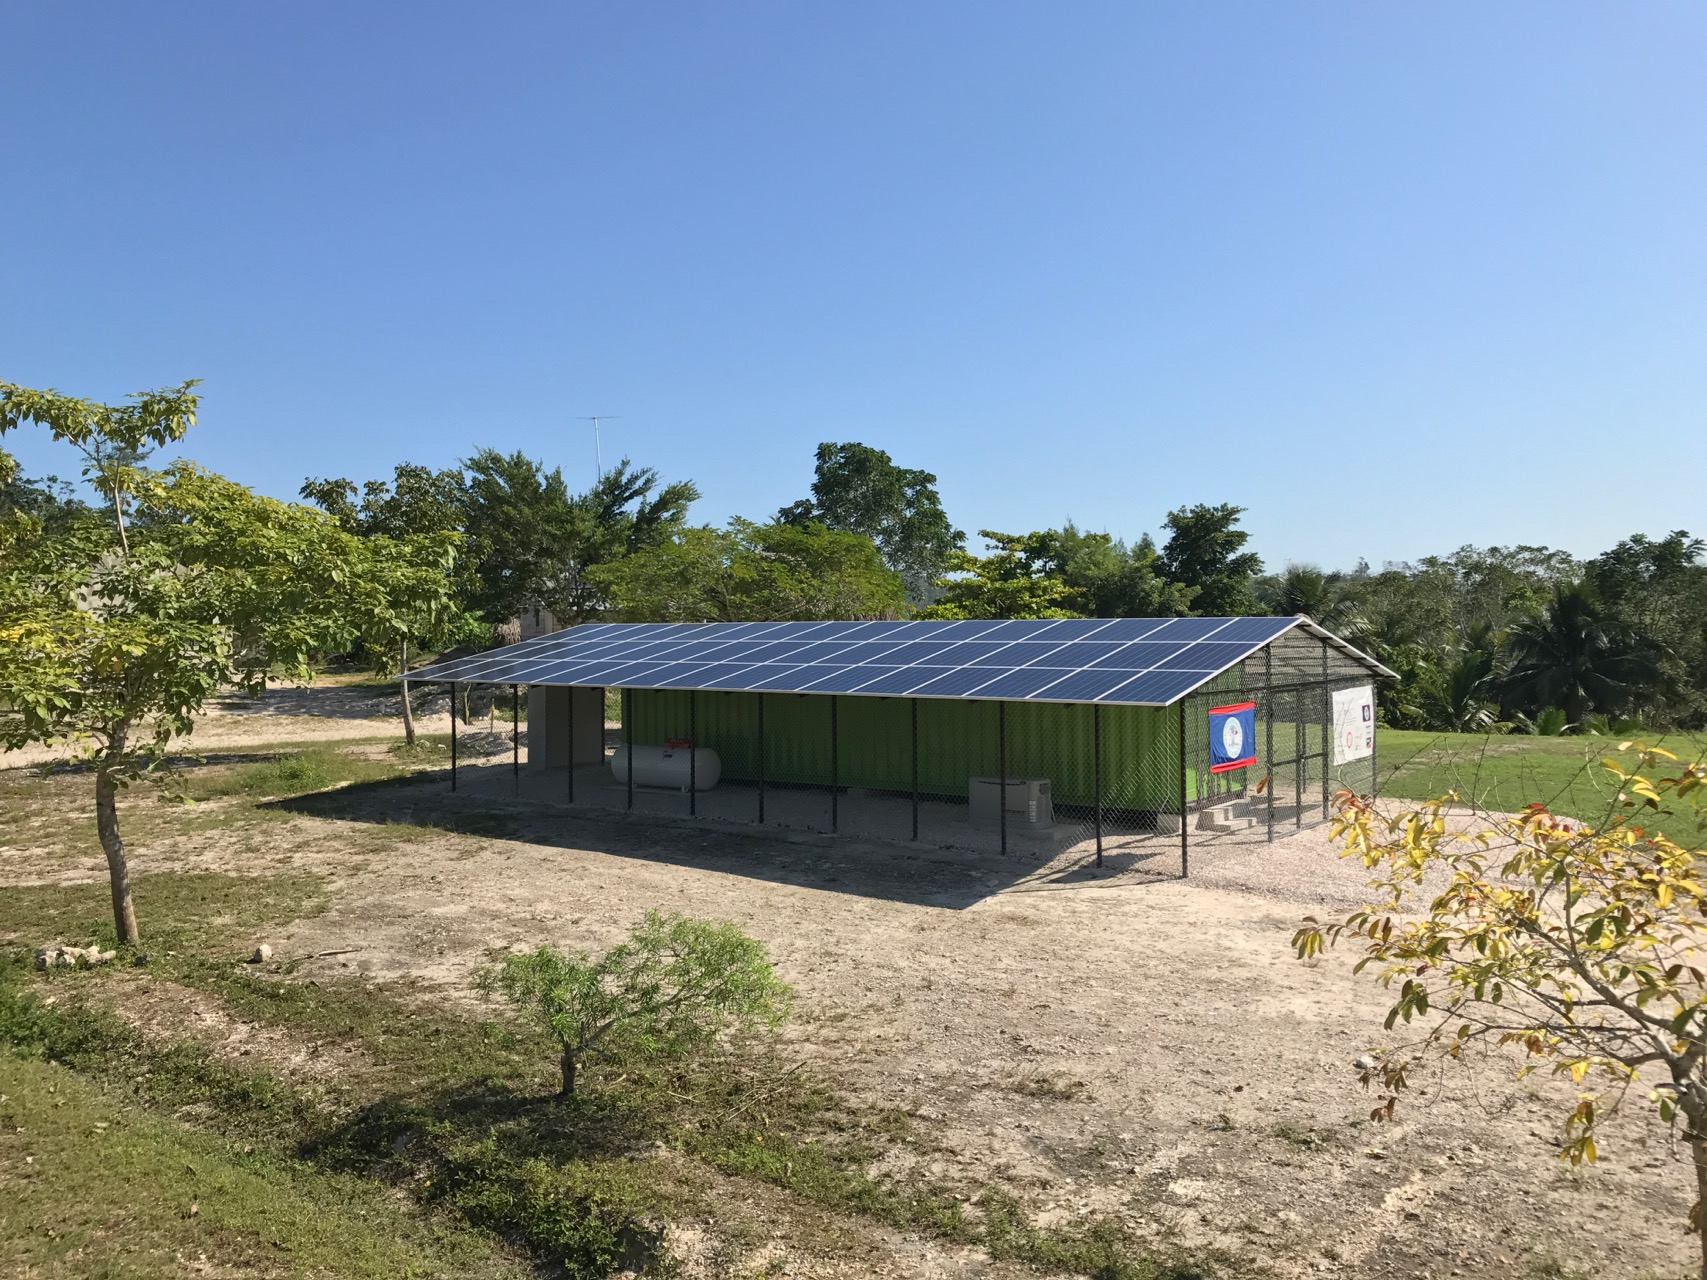 cdw-Modell elektrifiziert Belizes Dörfer (Replizierung des Smart Solar Off-Grid-Ansatzes)